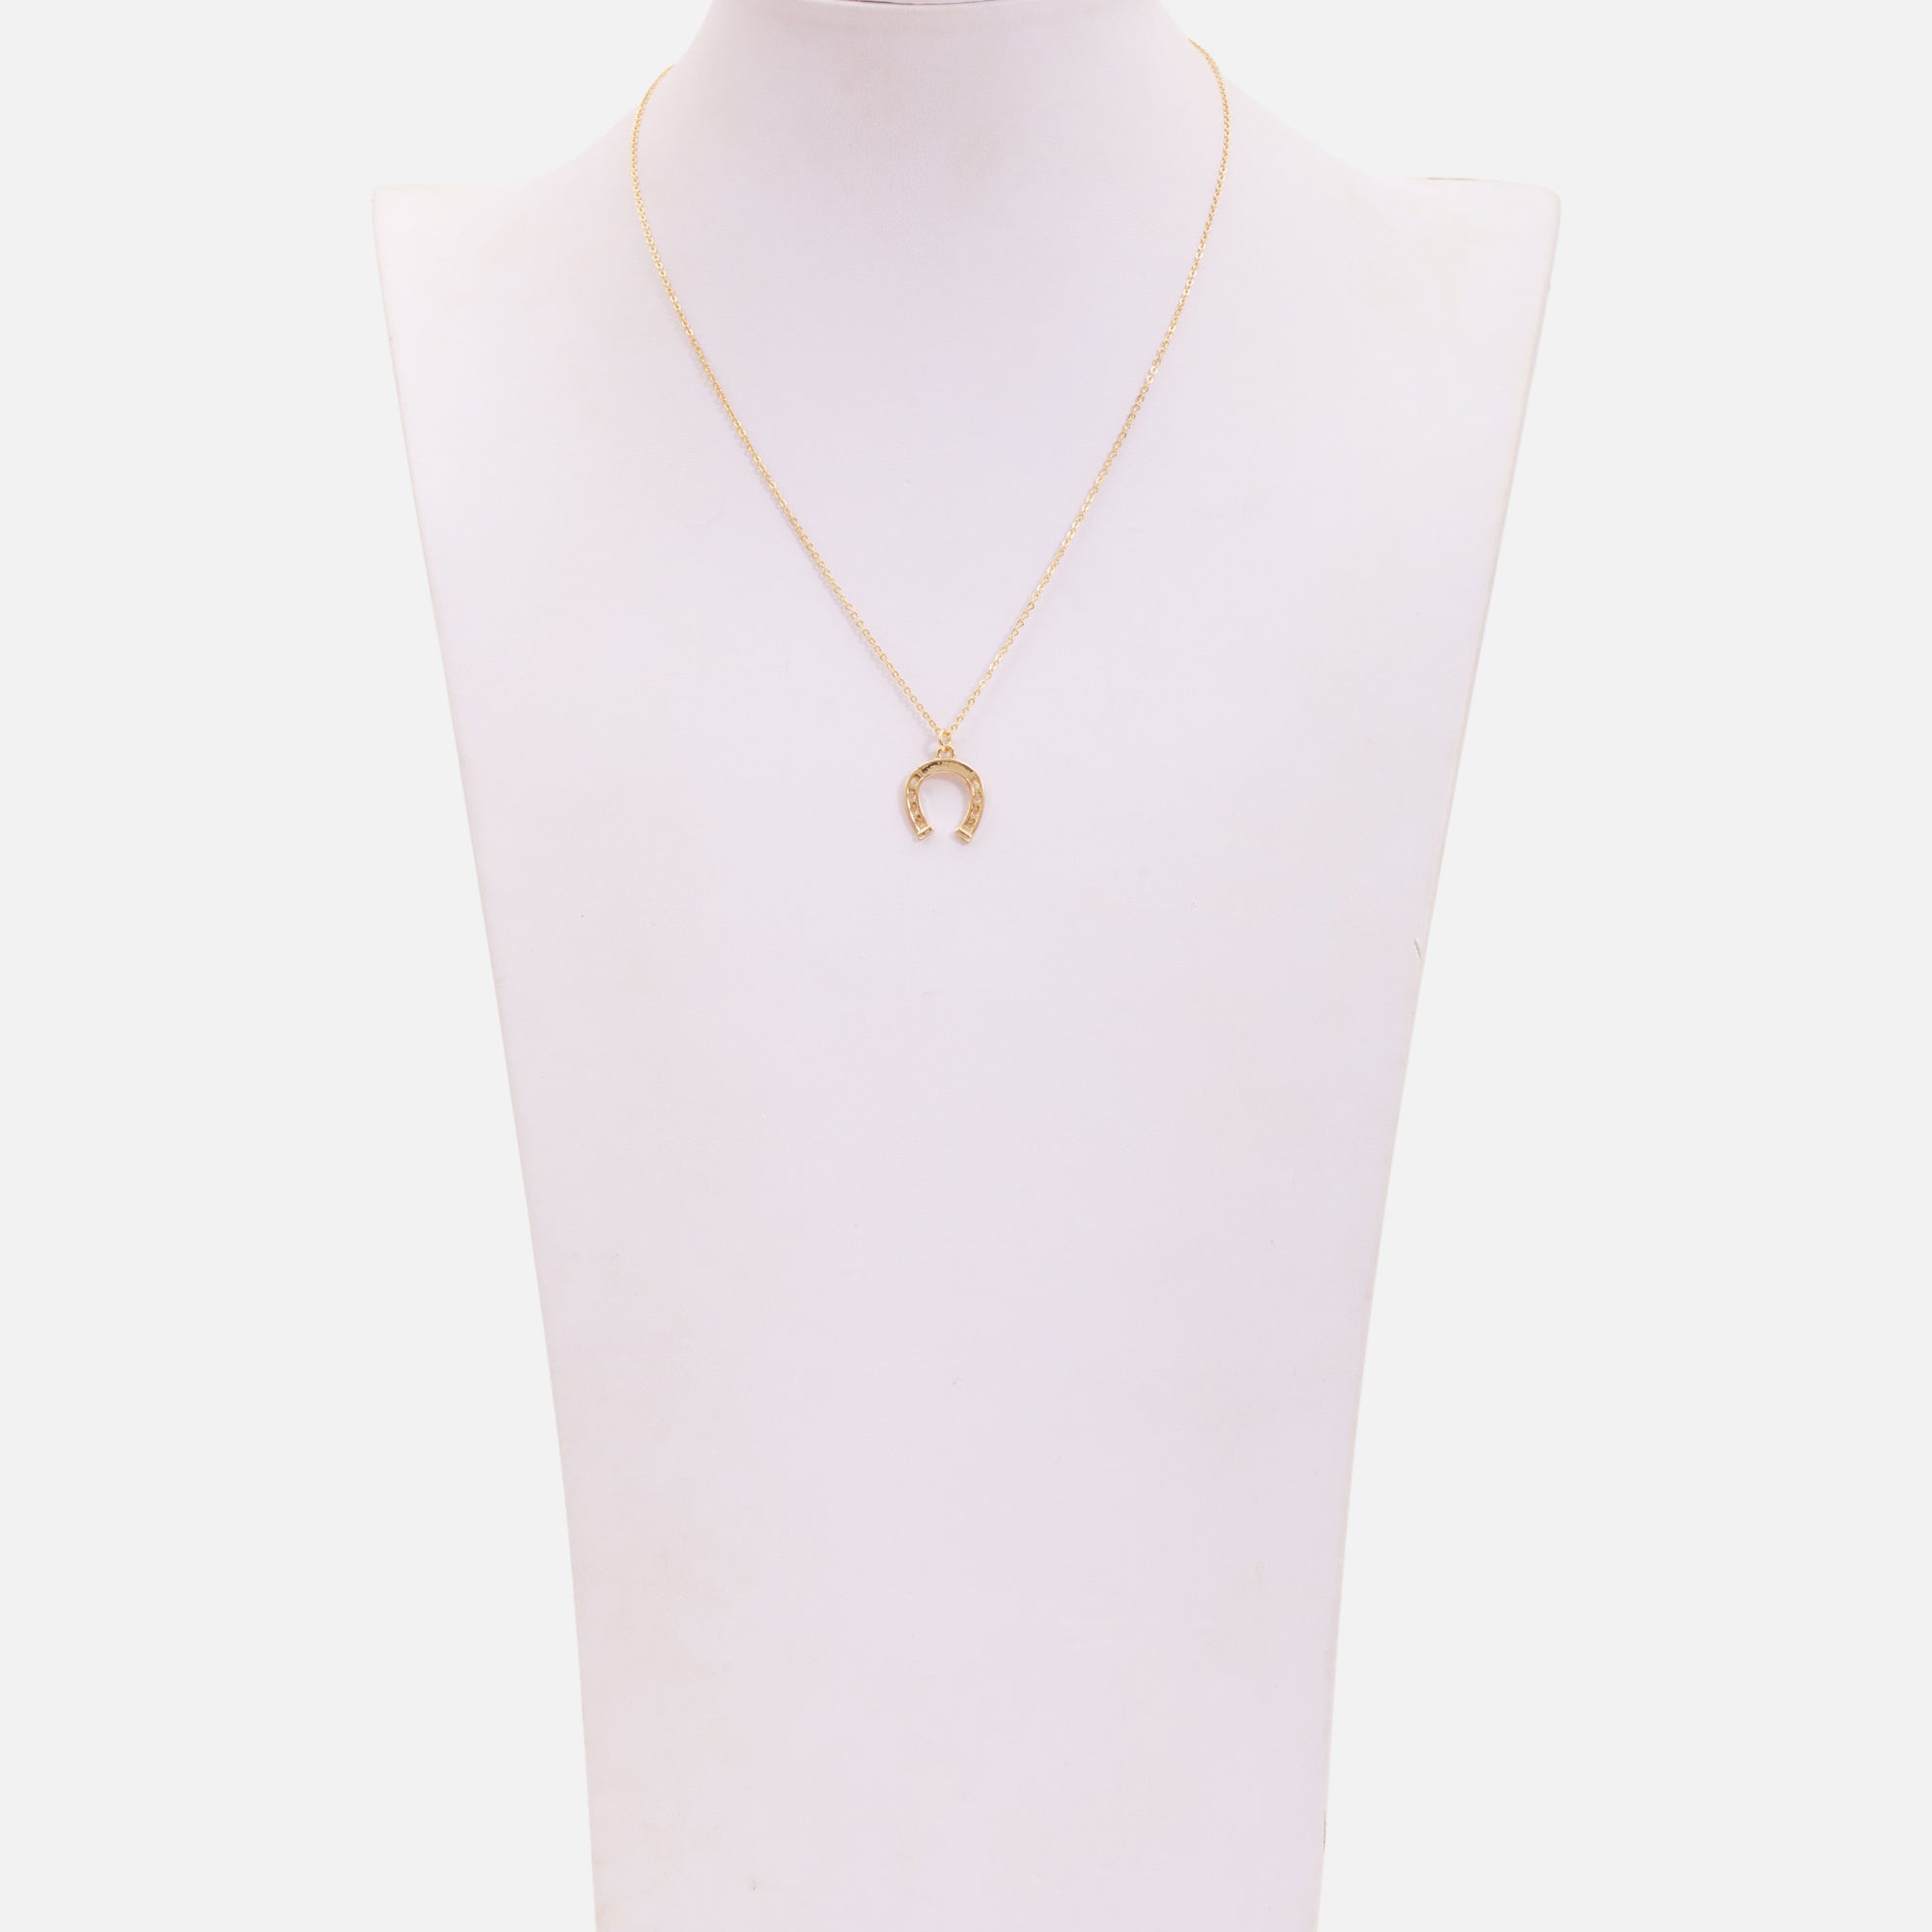 Golden necklace with horseshoe charm 